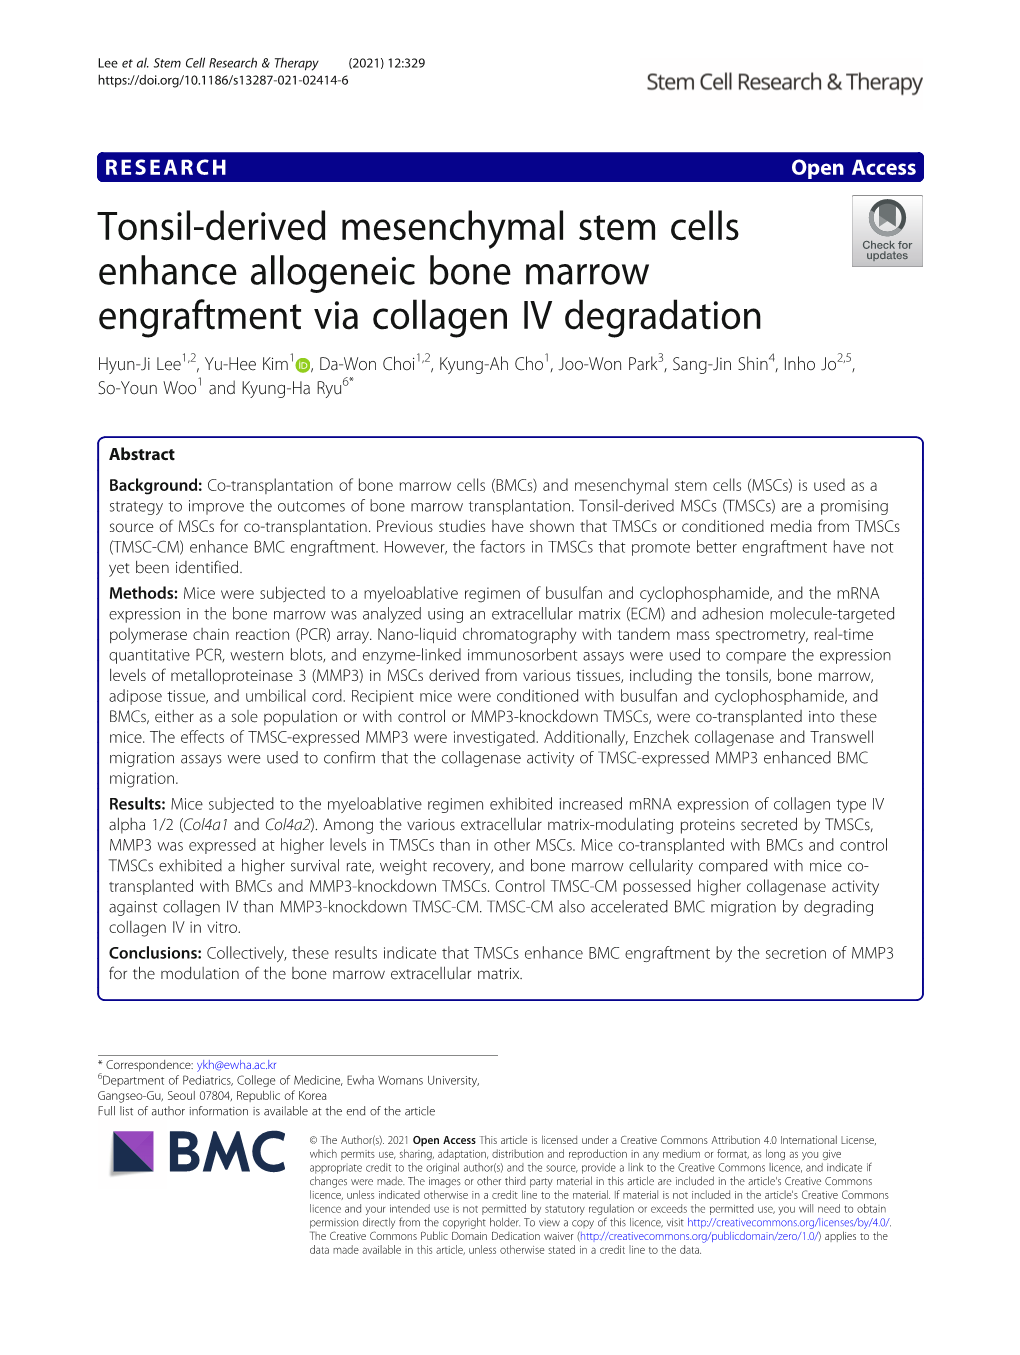 Tonsil-Derived Mesenchymal Stem Cells Enhance Allogeneic Bone Marrow Engraftment Via Collagen IV Degradation